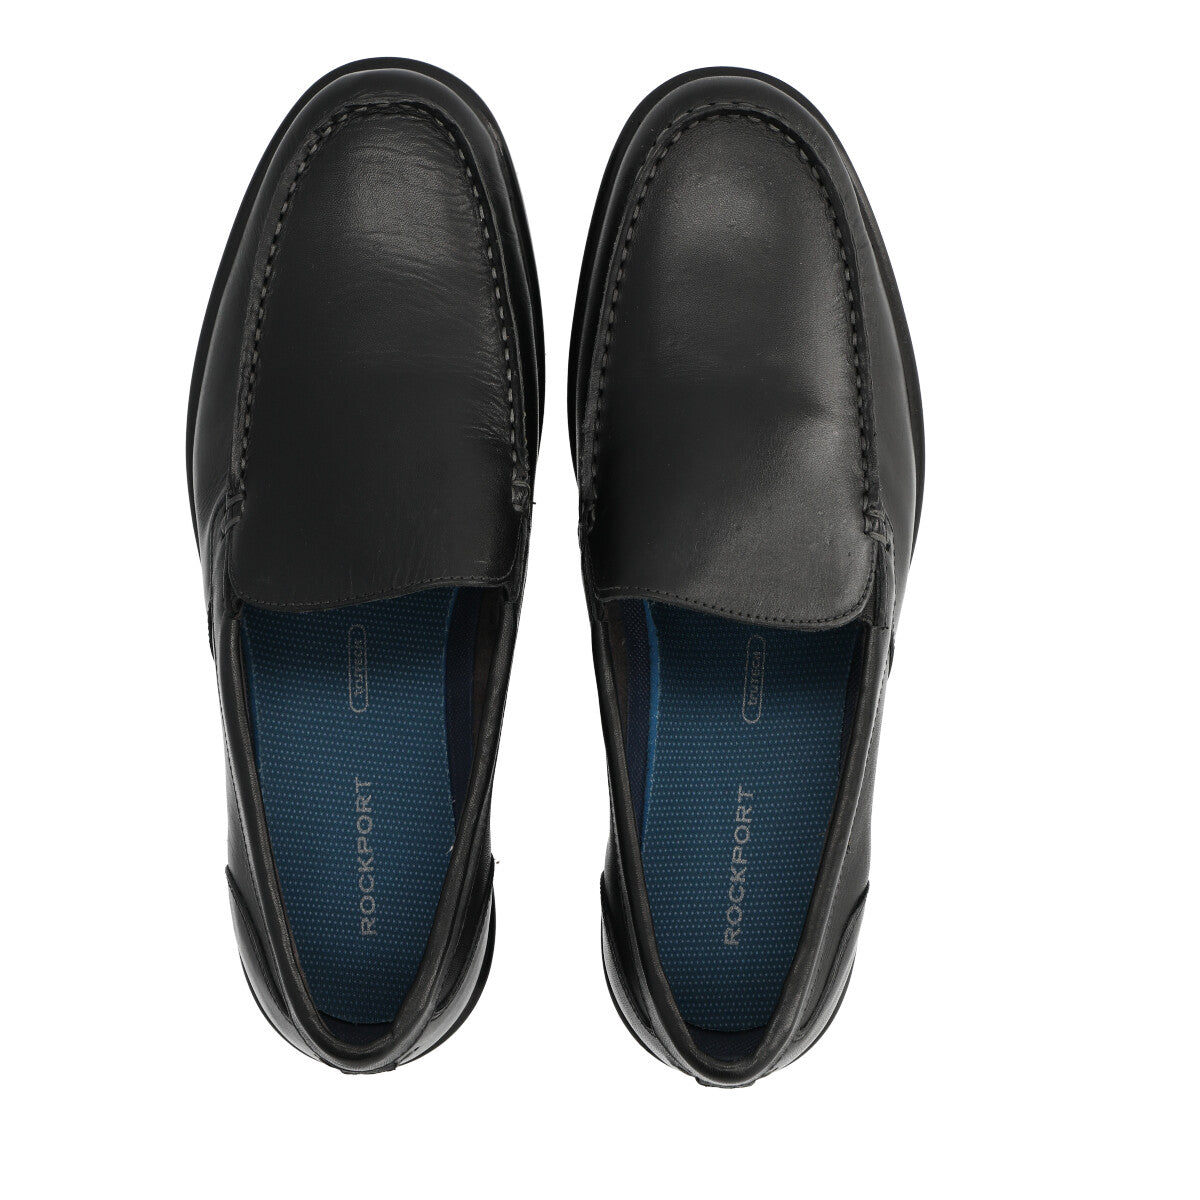 Rockport Brenton Venetian Black נעלי אלגנט לגברים